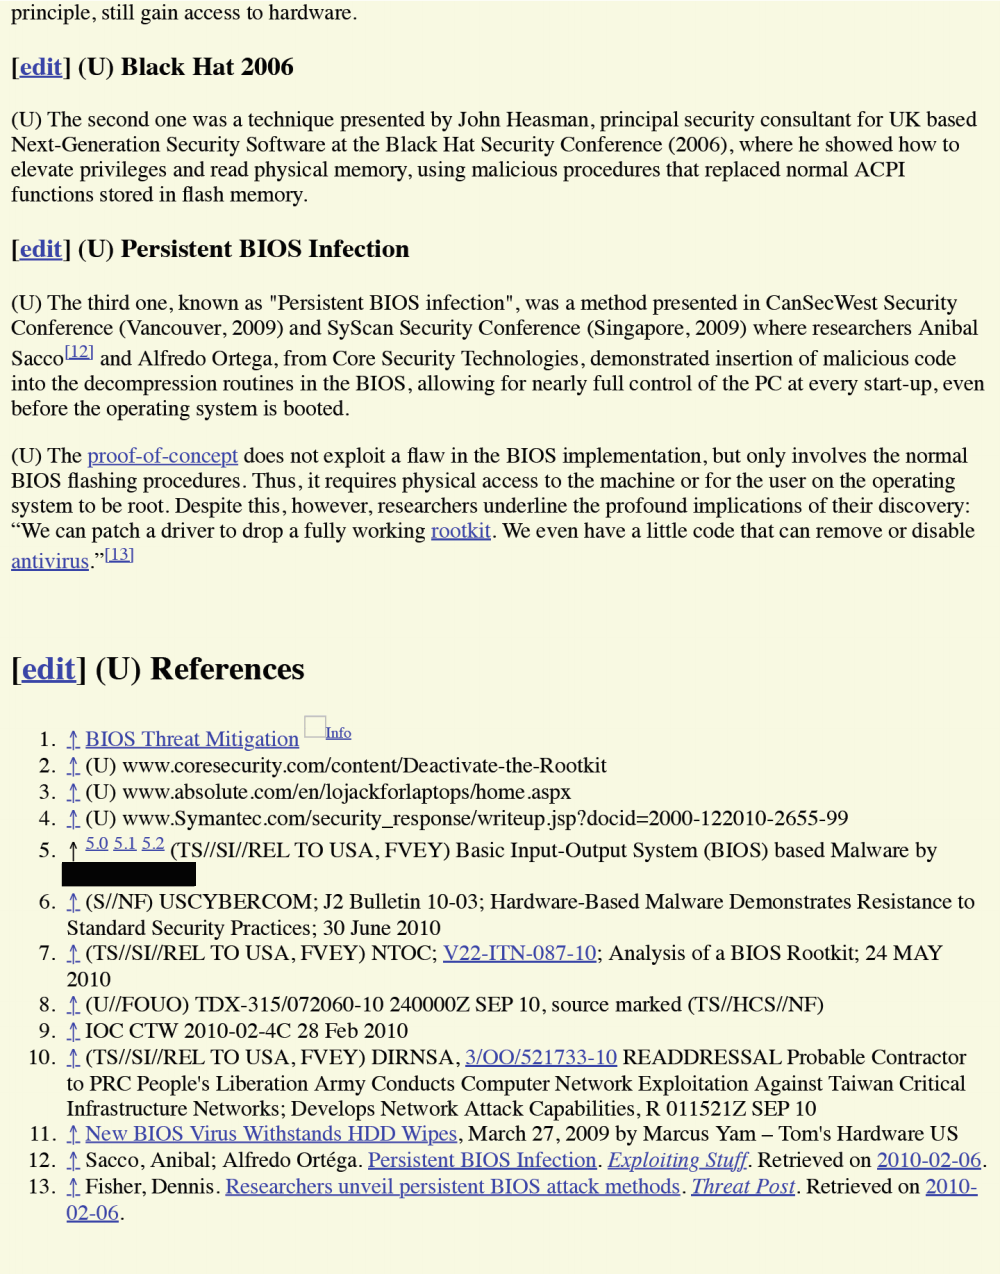 Page 4 from Intellipedia – BIOS Threats